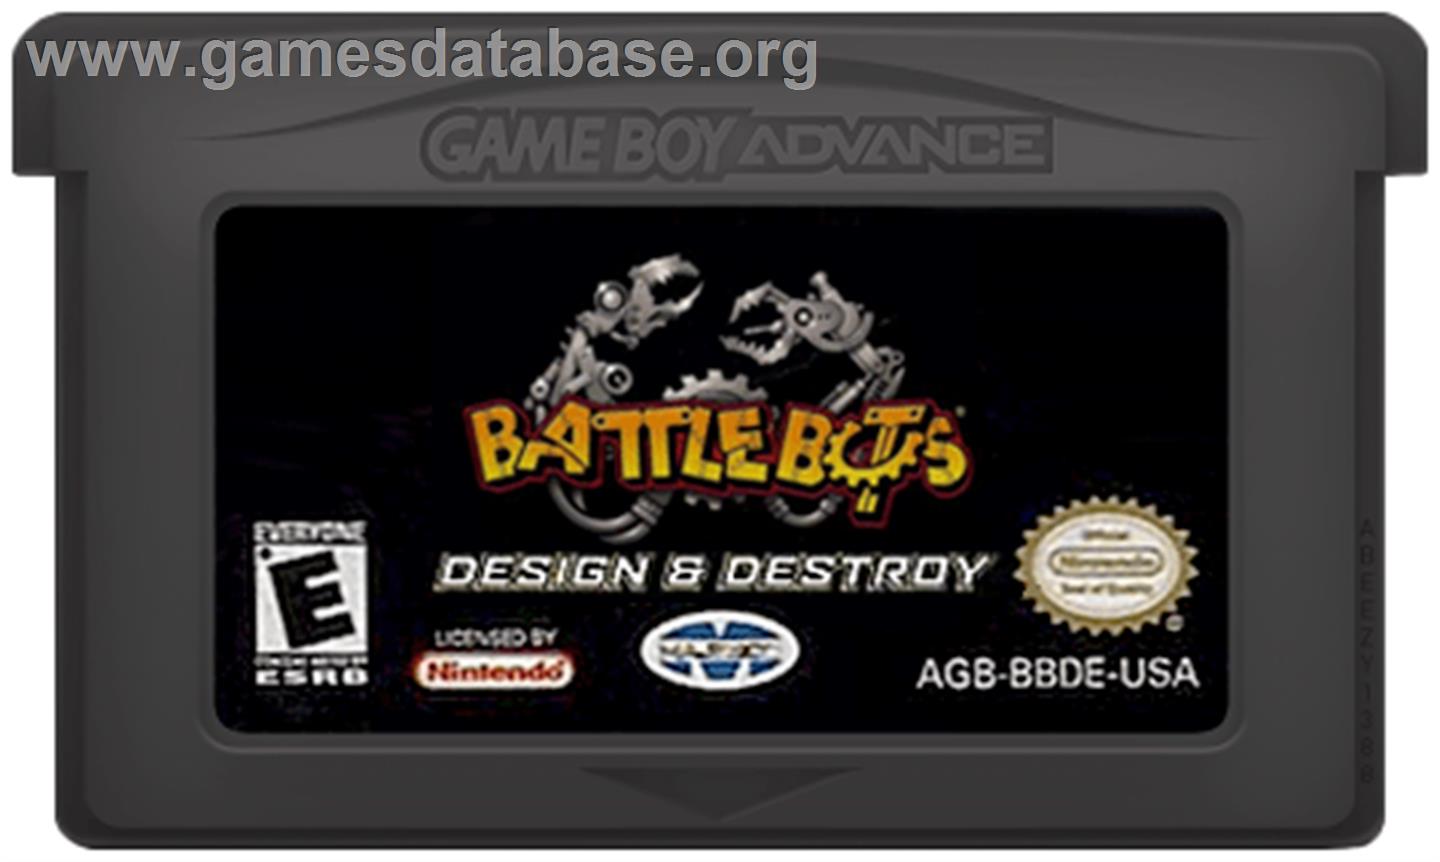 BattleBots: Design & Destroy - Nintendo Game Boy Advance - Artwork - Cartridge